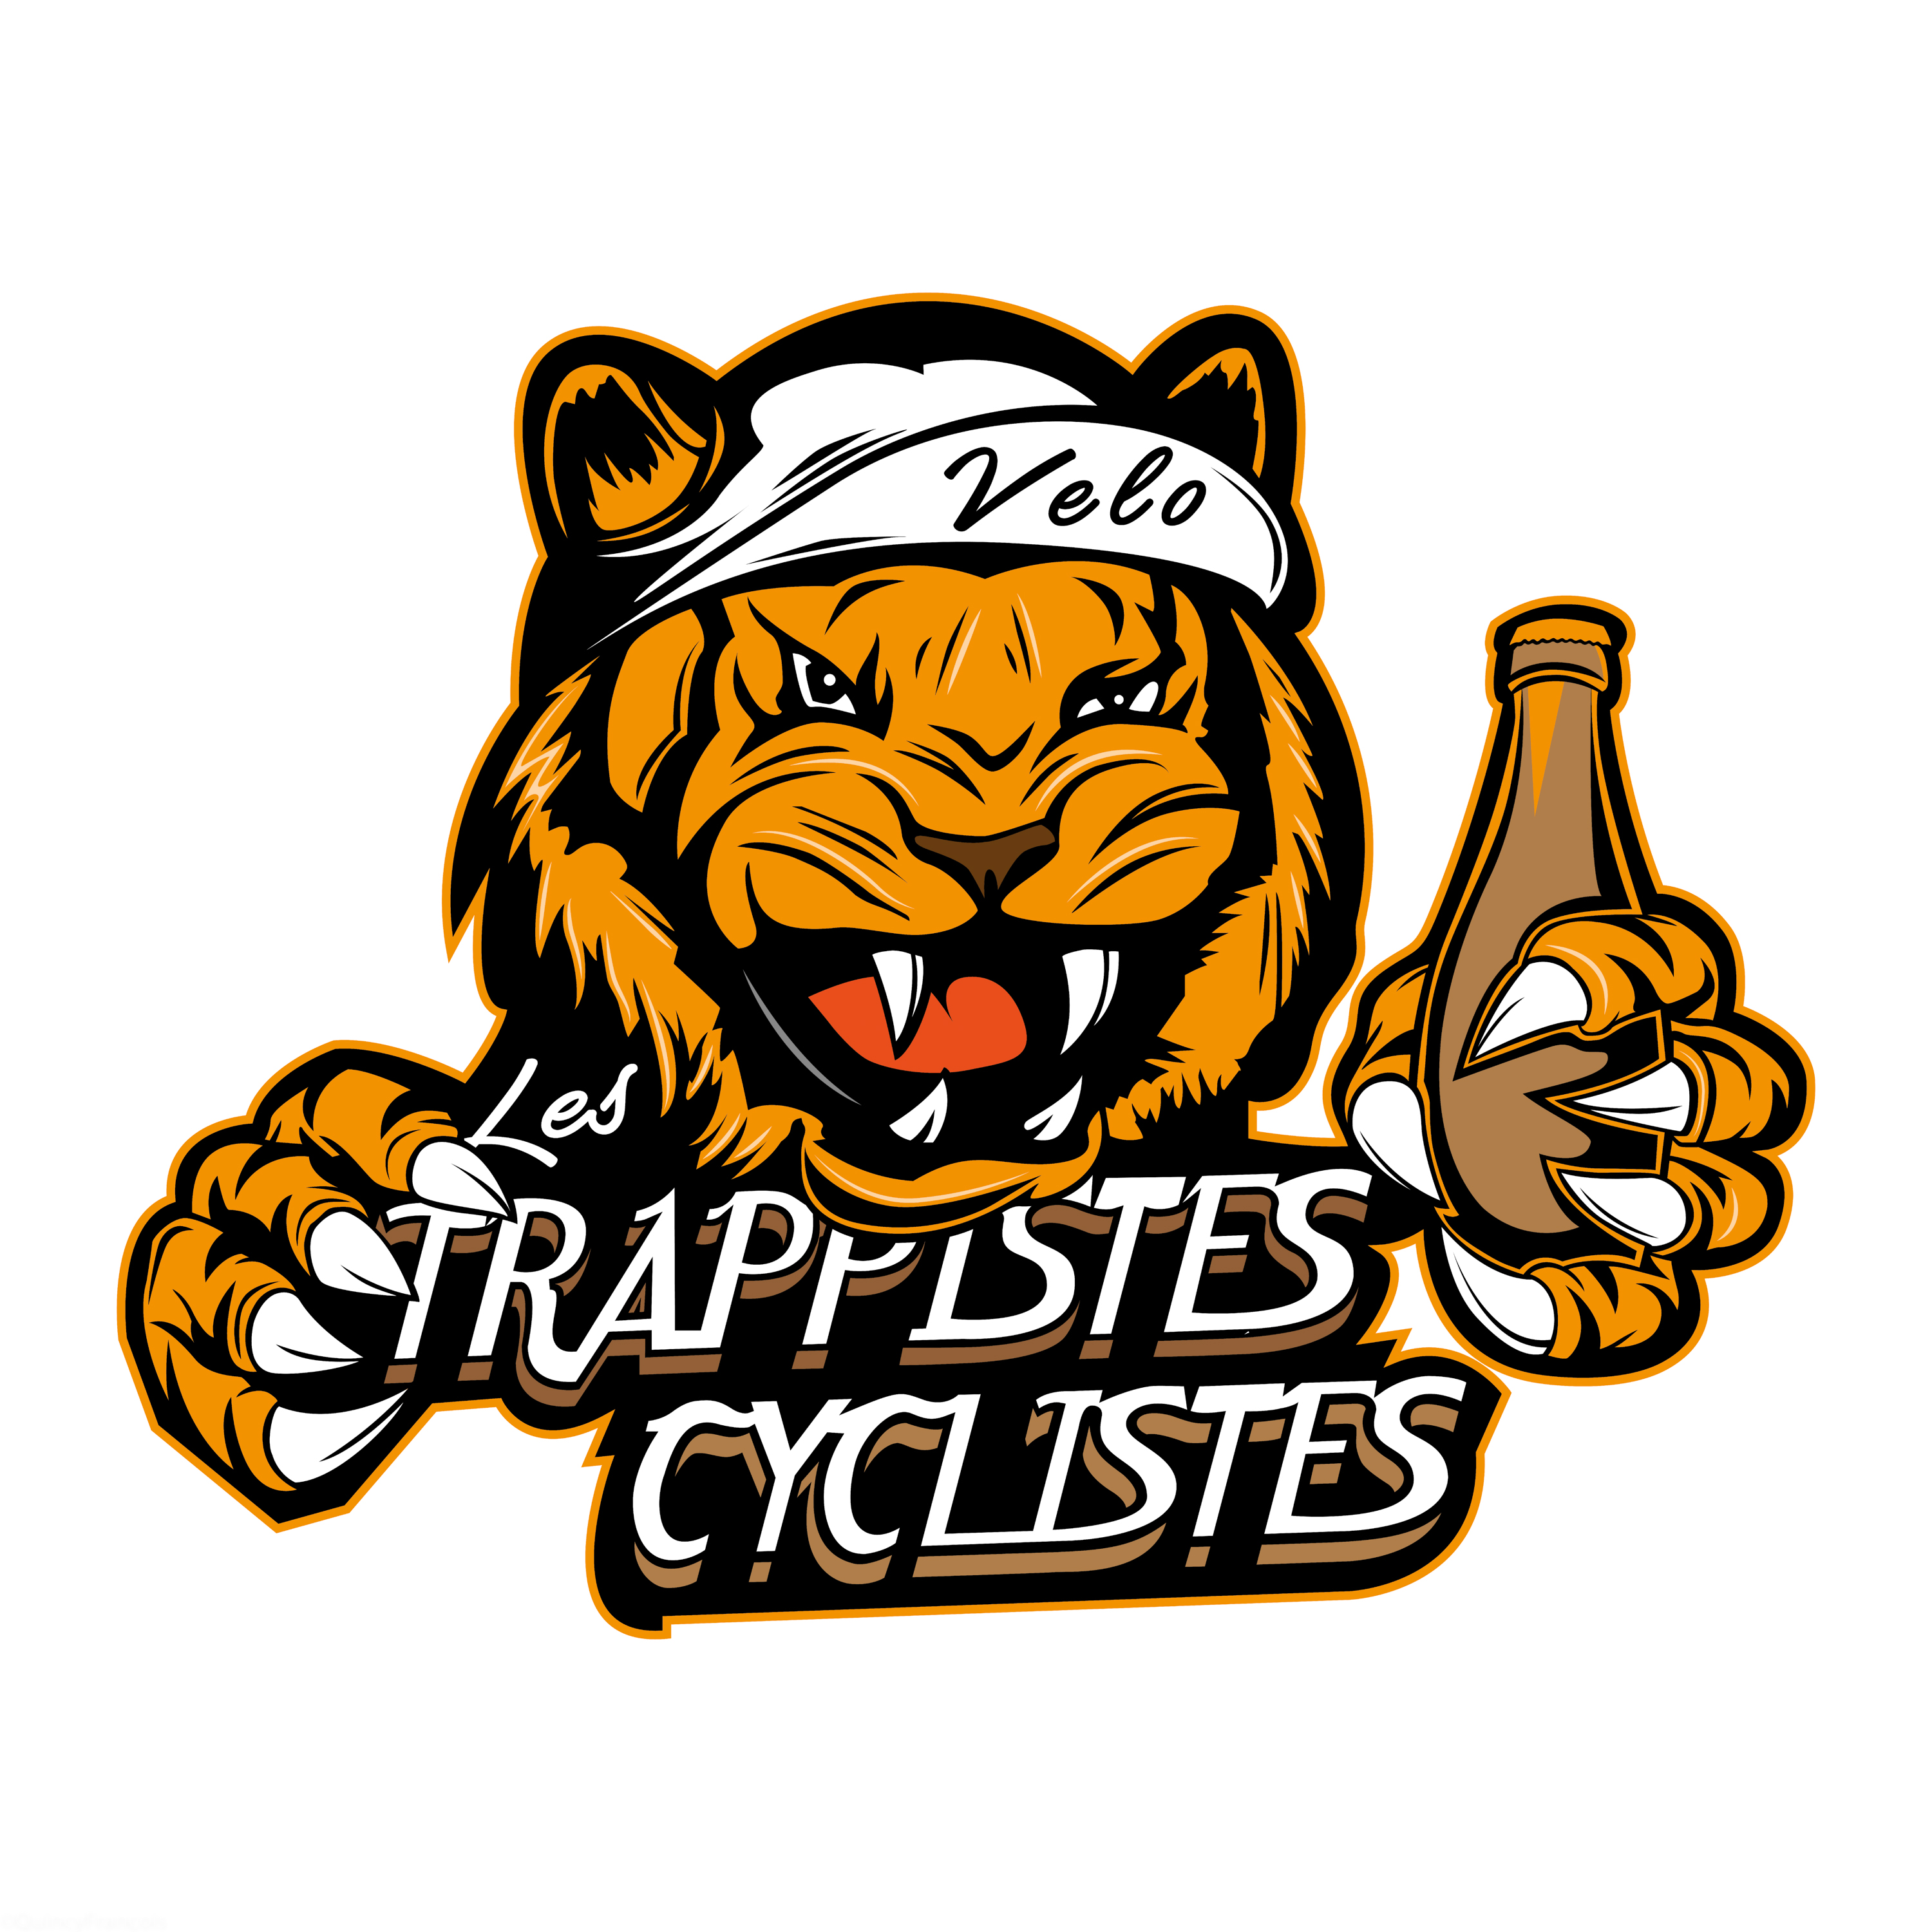 Project: Les Trapistes Cyclistes